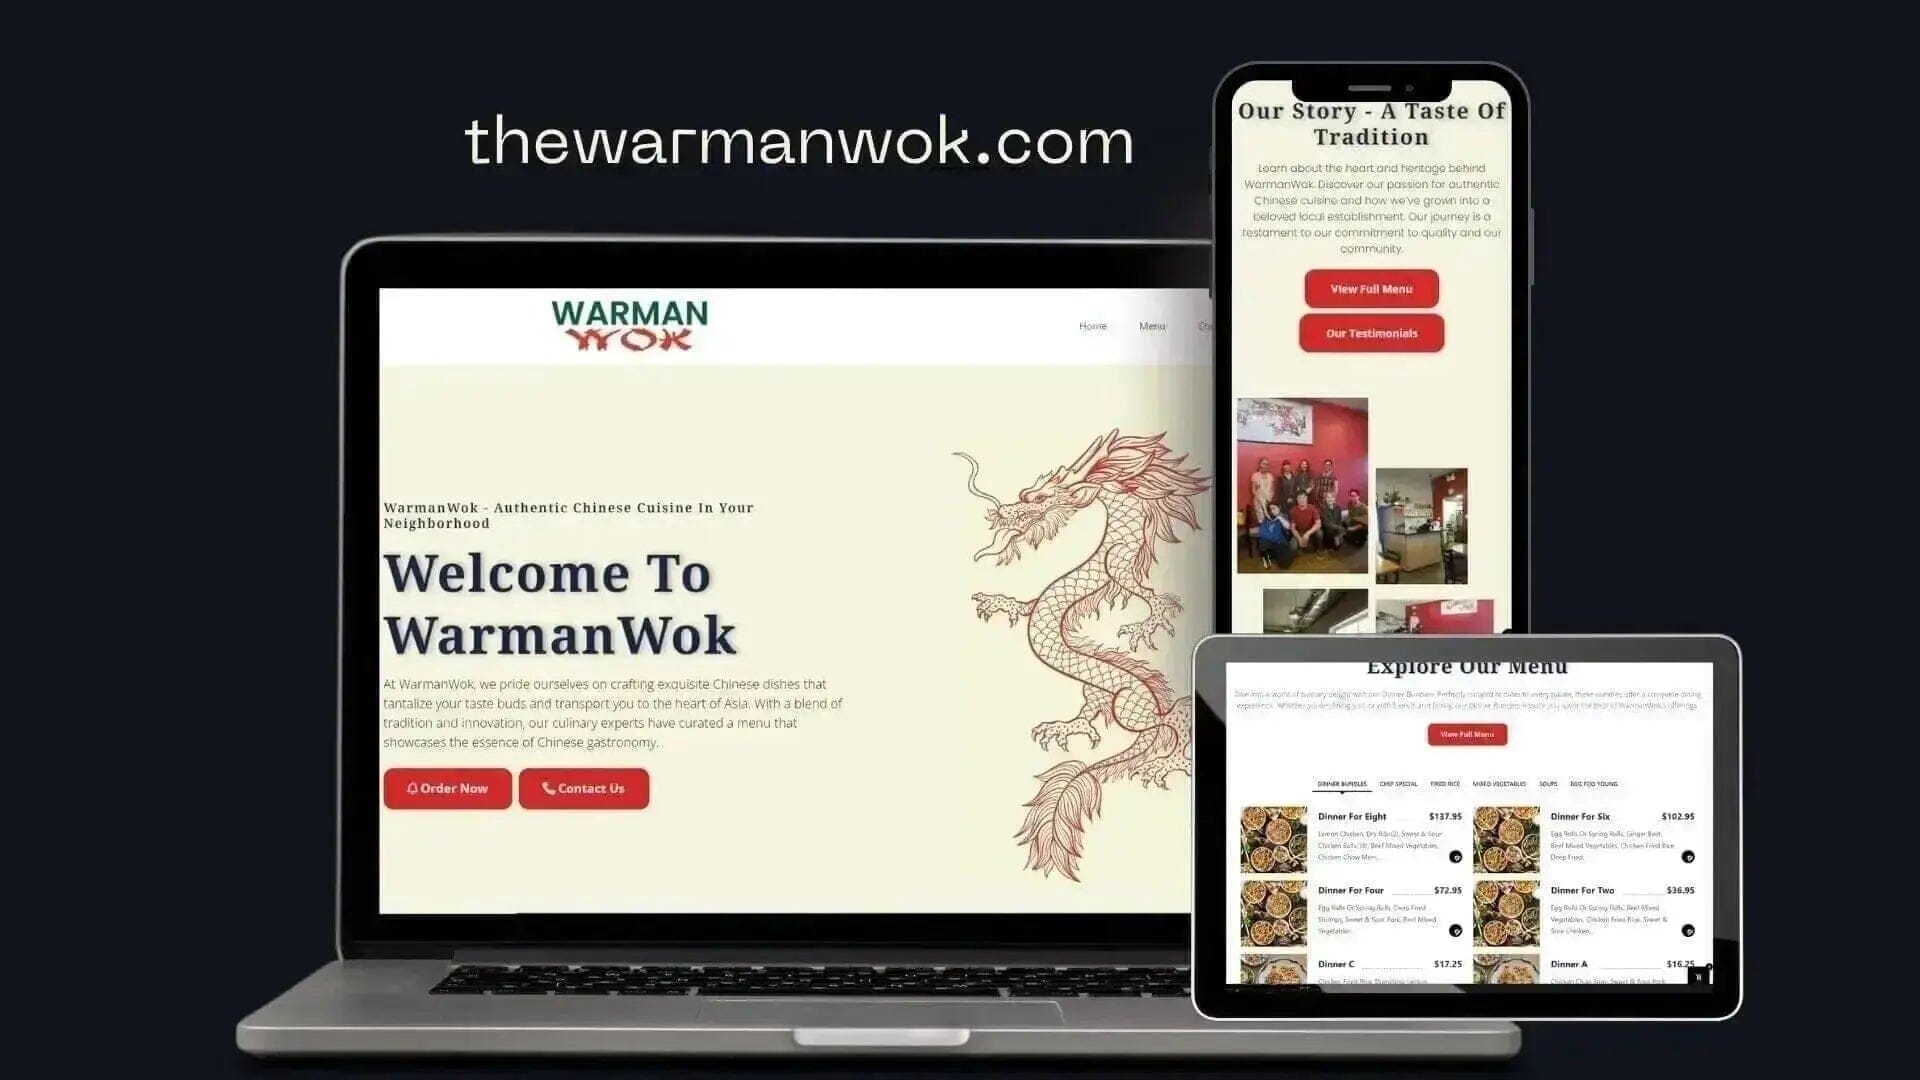 Case Study: Transforming WarmanWok (Update)